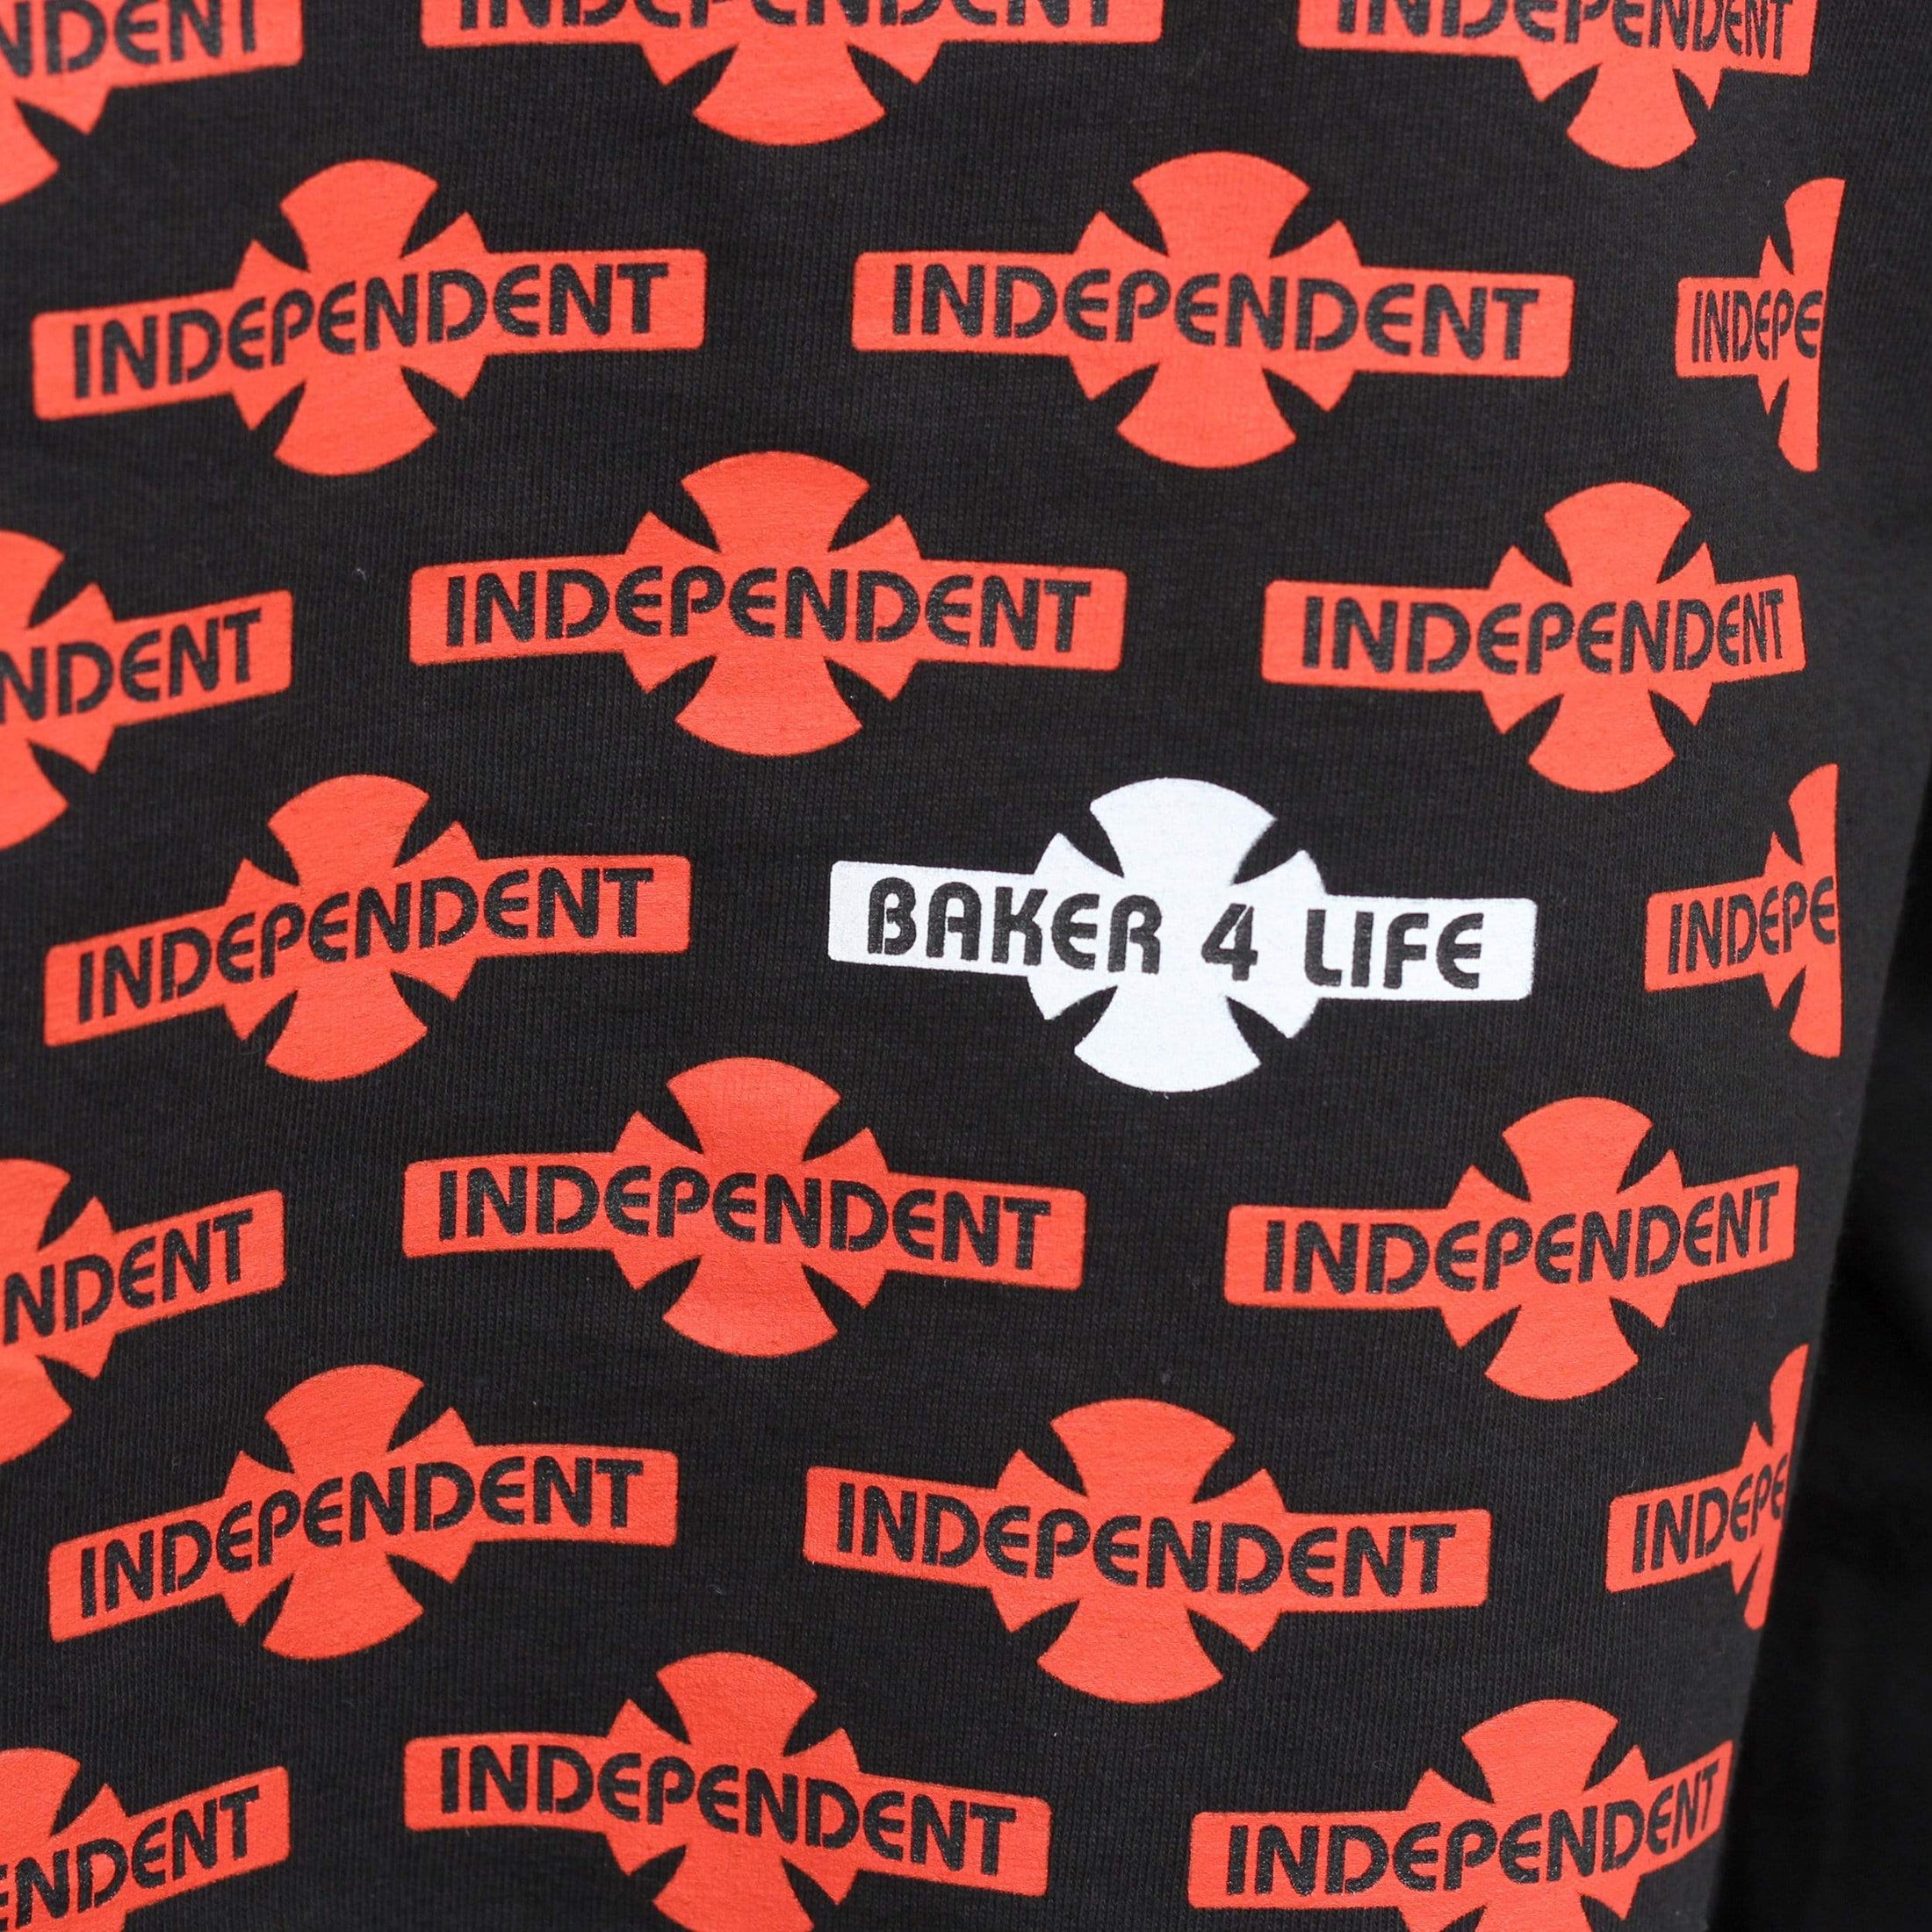 Independent Baker 4 Life Longsleeve T-Shirt Black